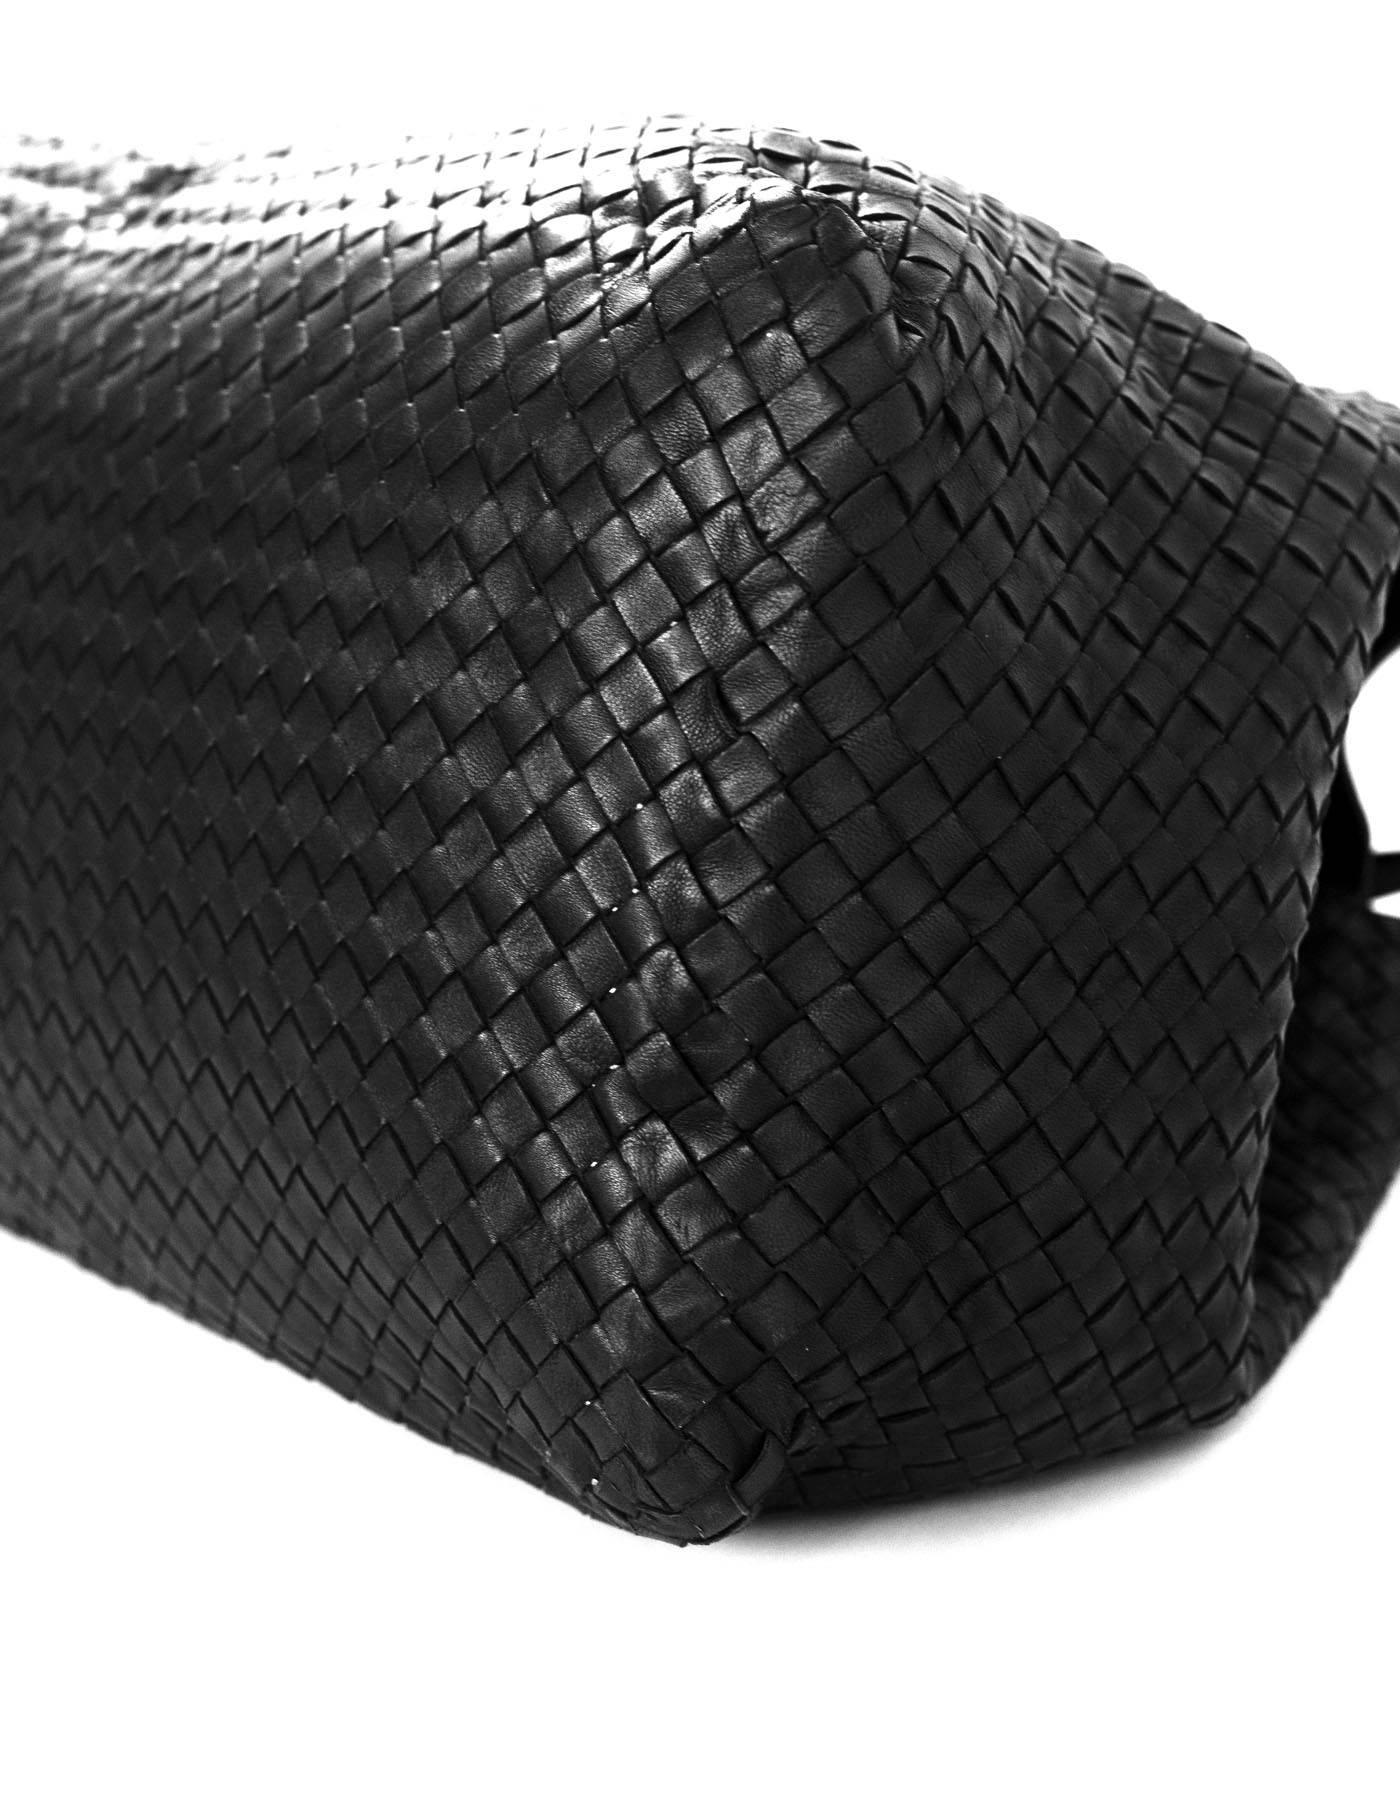 Bottega Veneta Black Intrecciato Large Tote Bag rt. $3, 950 2